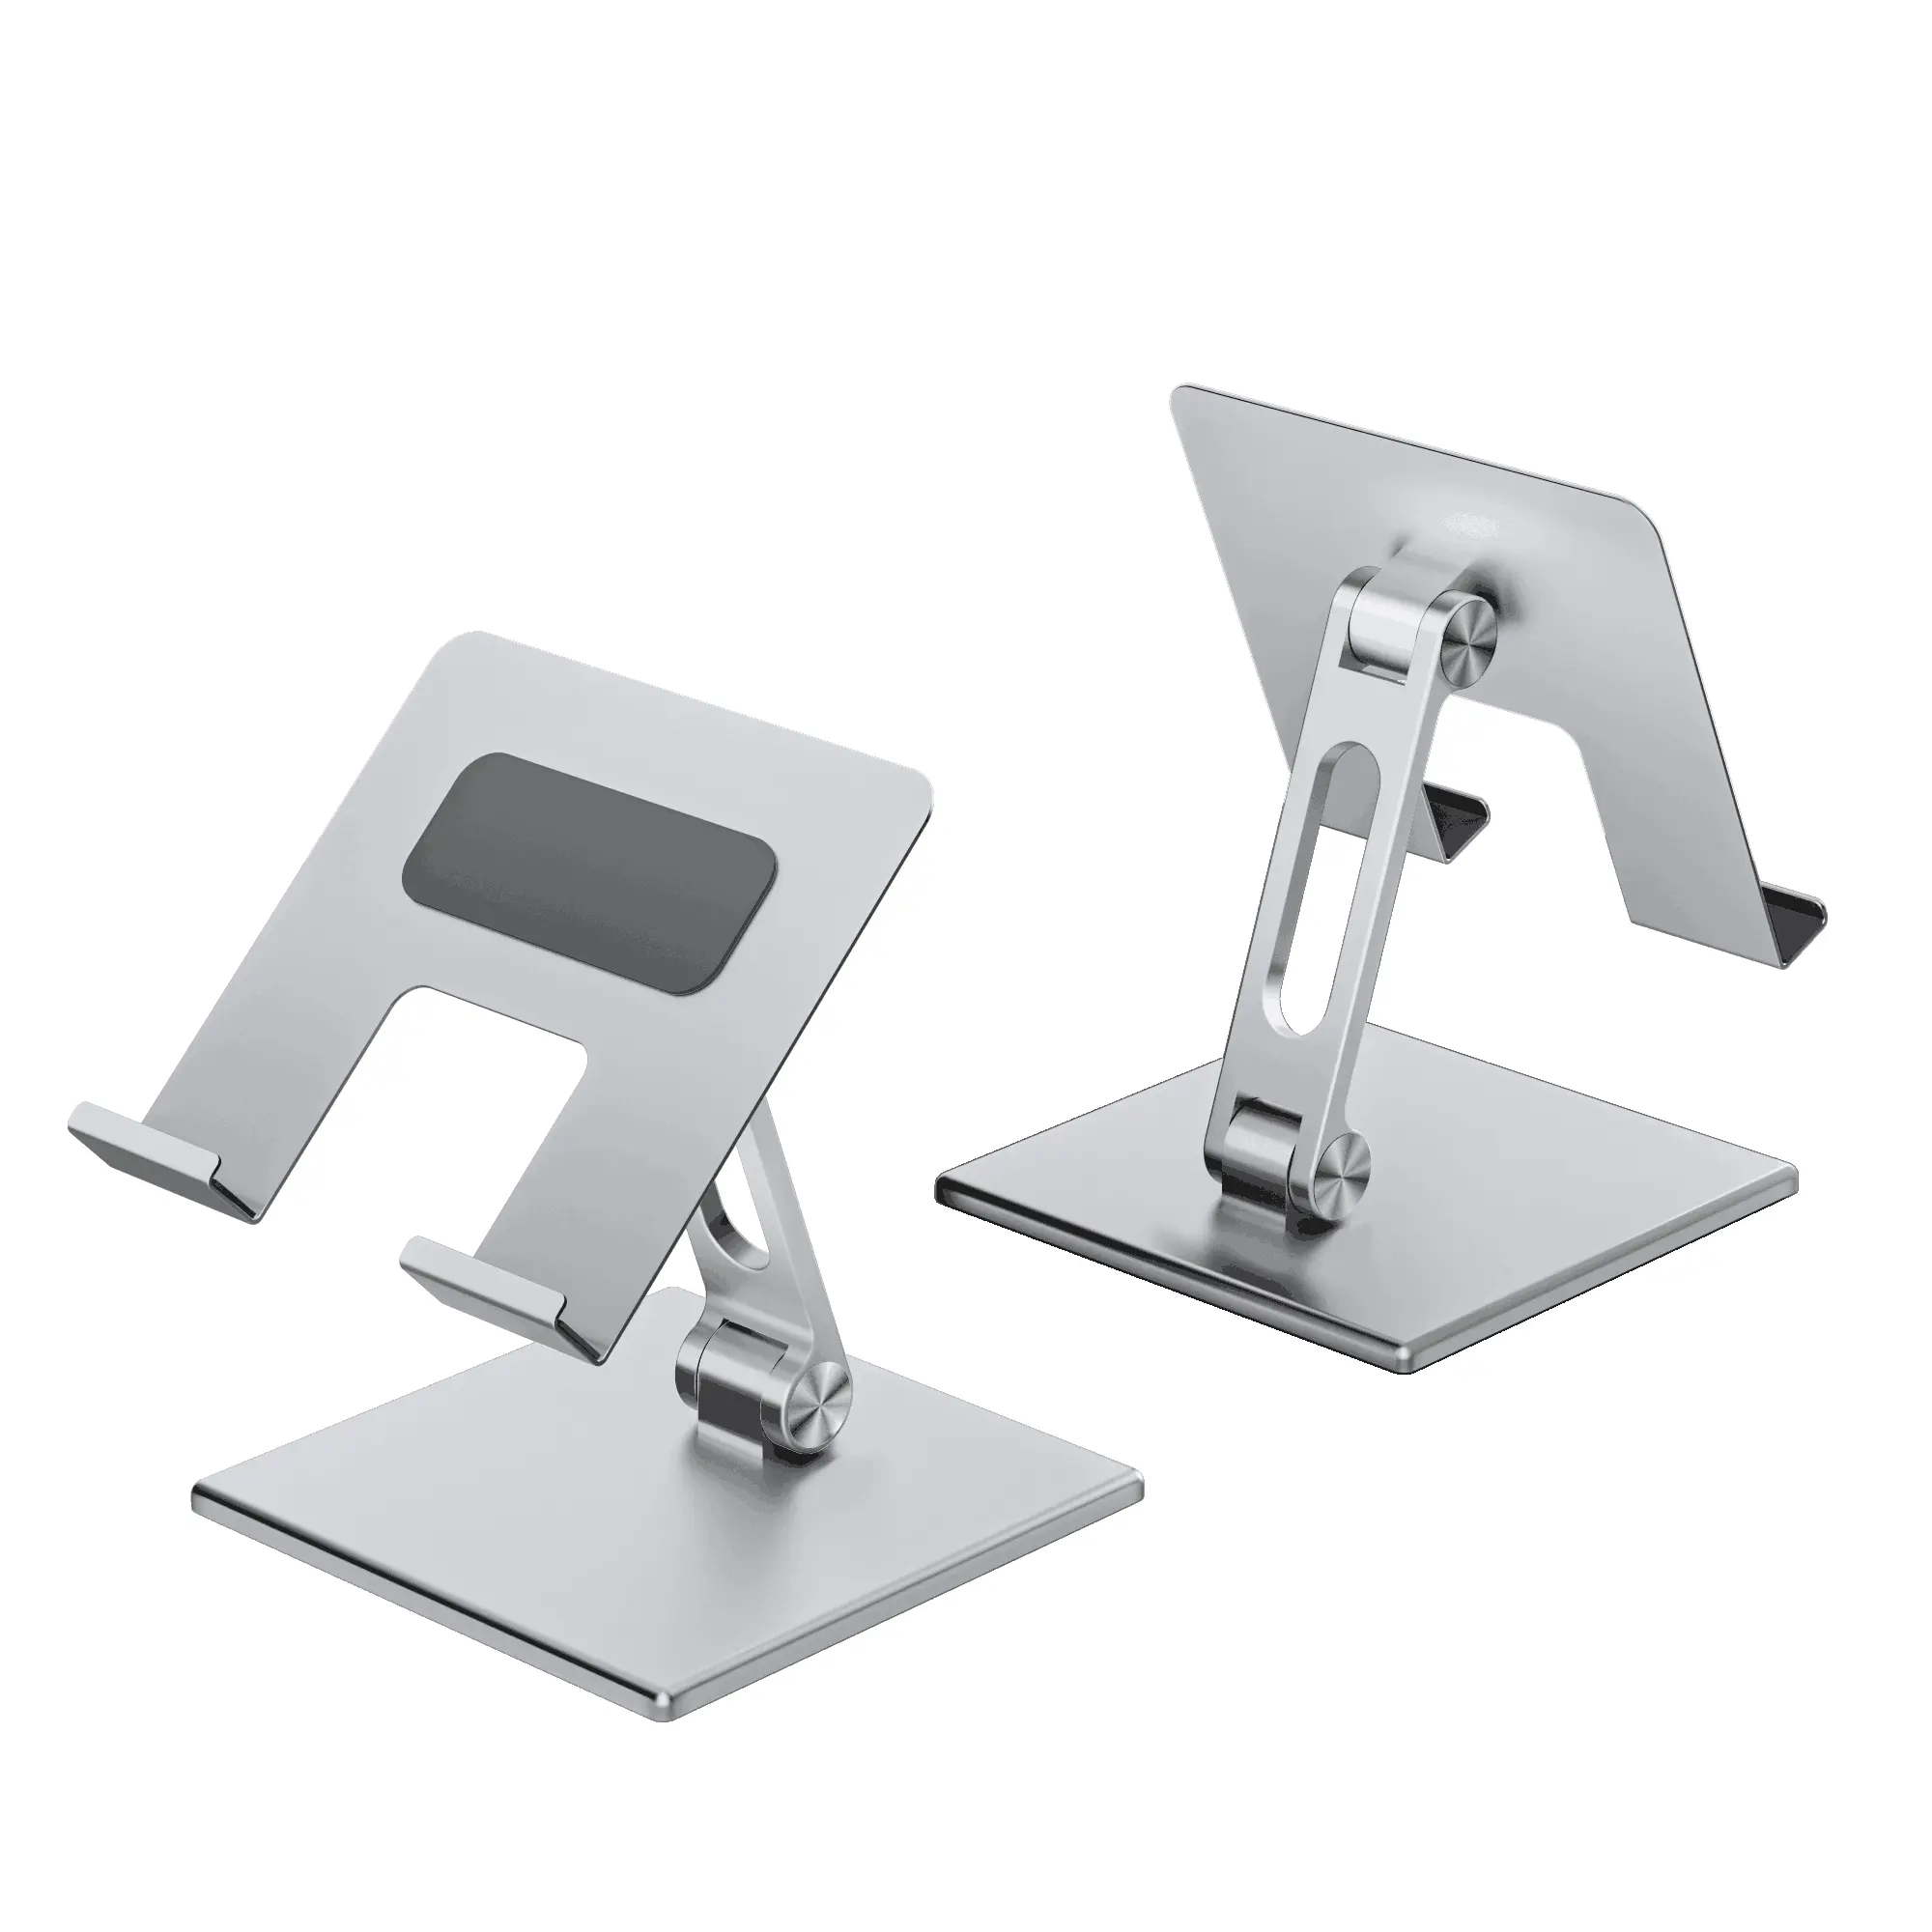 Adjustable Desktop Tablet Holder Universal Table Cell Phone Stand Metal Desk Mobile Phone Holder Stand For iPhone iPad